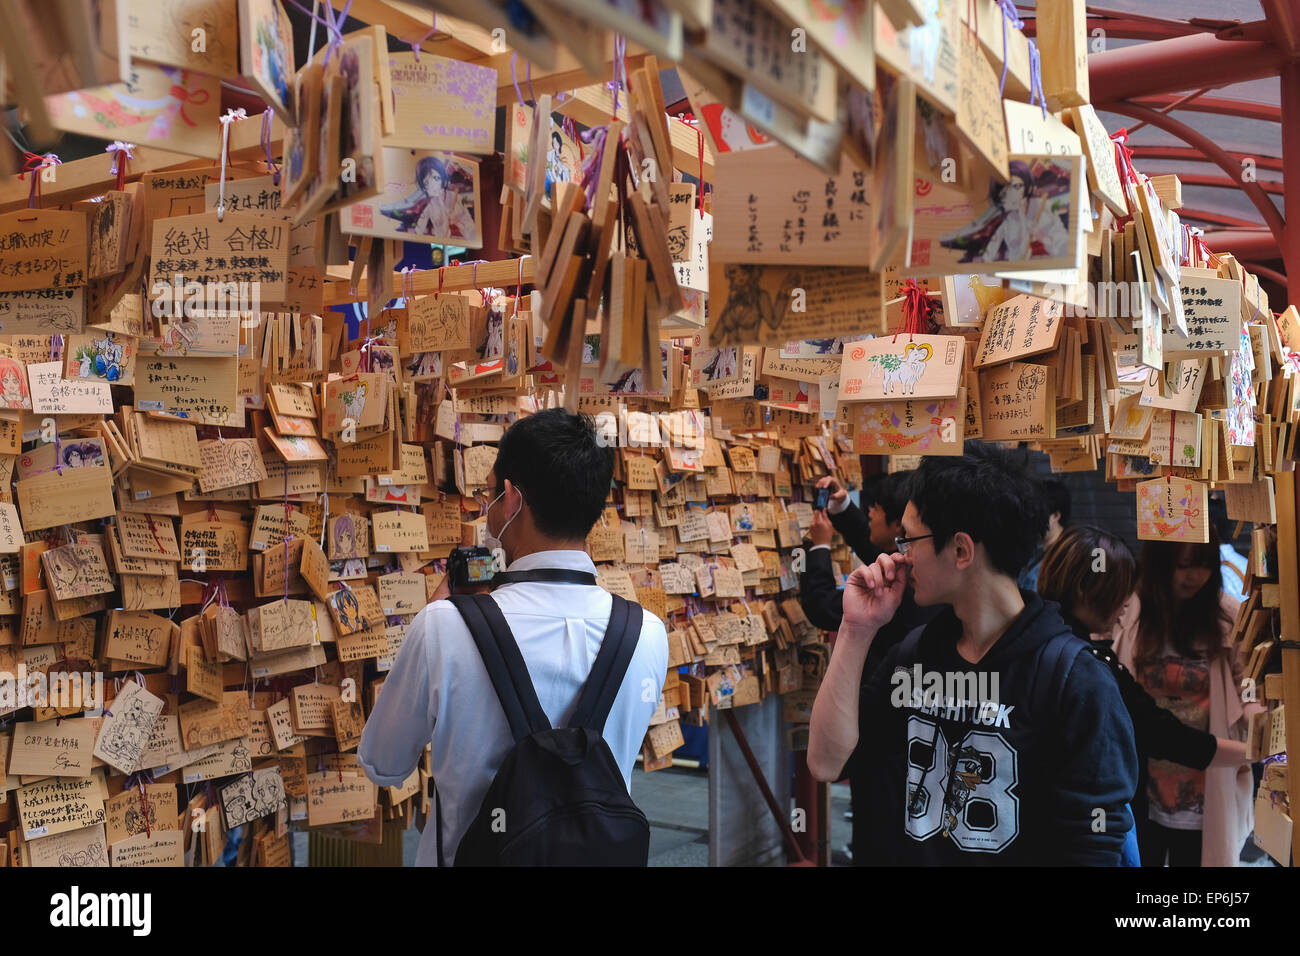 Offered Emas, Wooden wishing plaques at Kanda Shrine Stock Photo